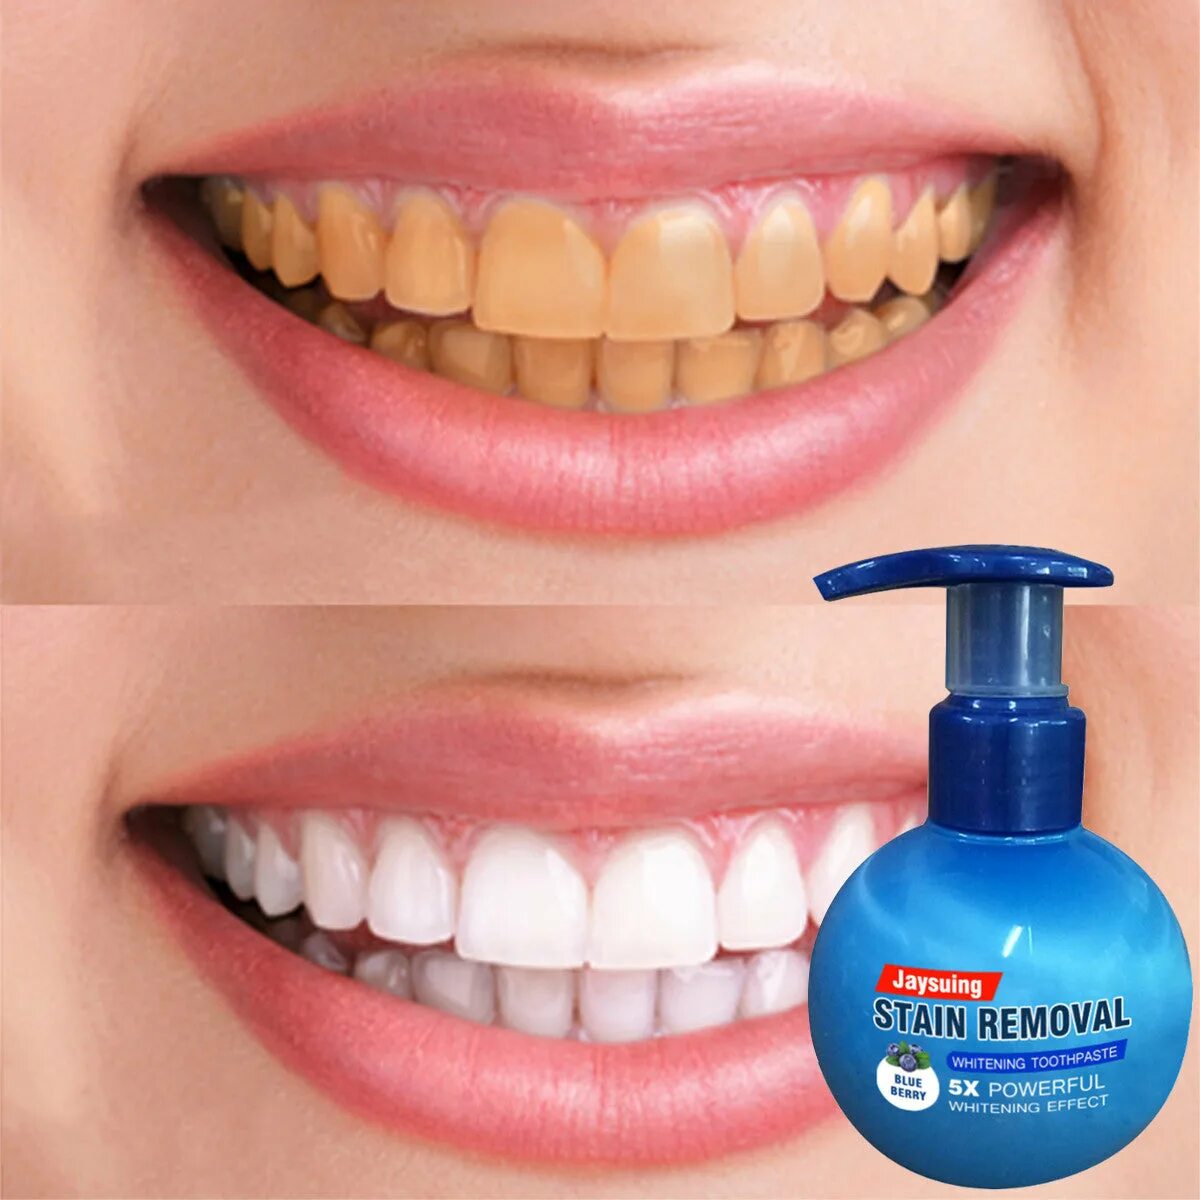 Stain removal паста. Baking Soda Toothpaste зубная паста. Корейская зубная паста Stain removal. Отбеливатель для зубов к зубной пасте.